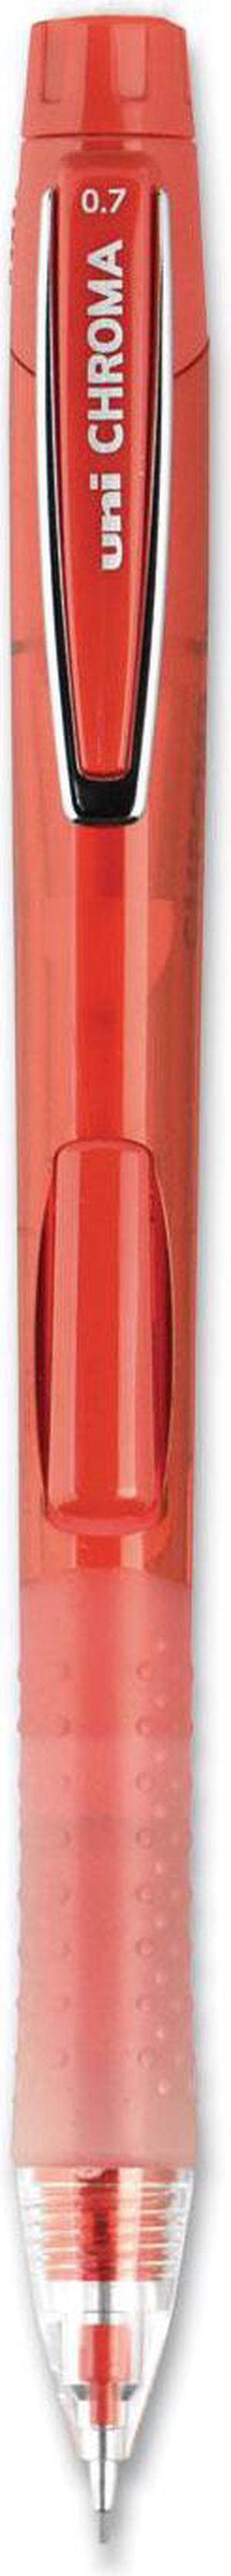 Uni-ball Chroma Mechanical Pencil, 0.7 mm, HB (#2), Black Lead, Red Barrel, Dozen